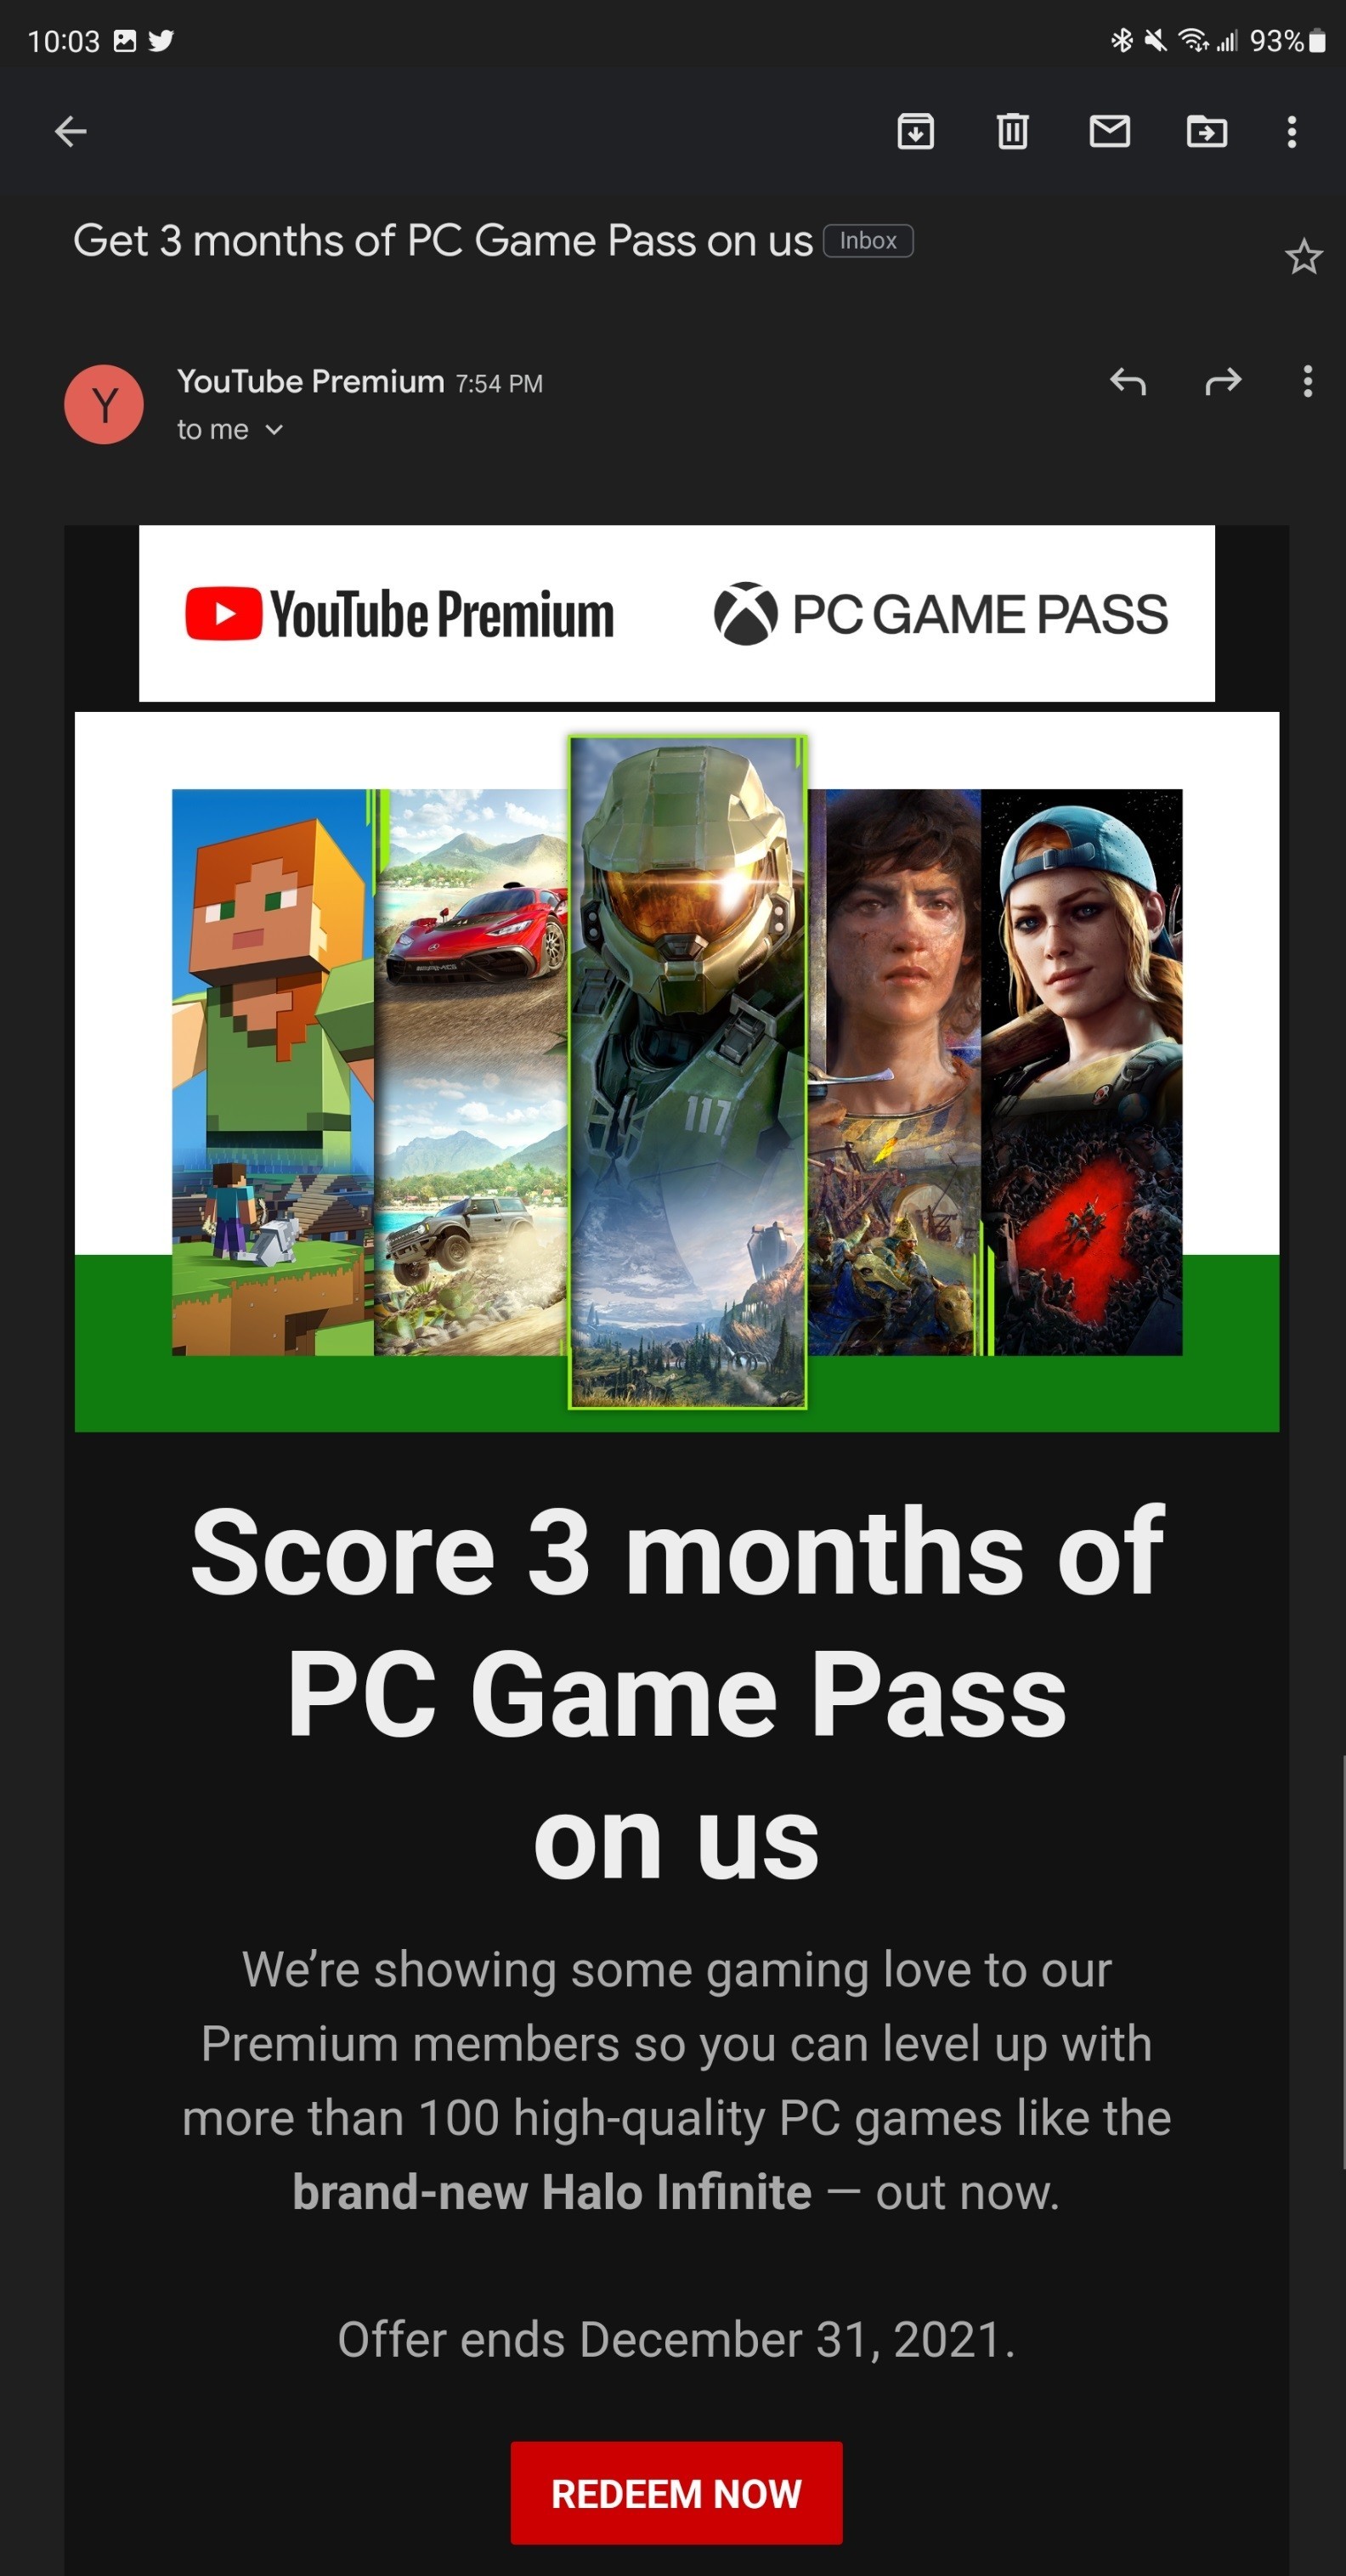 مشتركي YouTube Premium يمكنهم الحصول على 3 شهور من PC Game Pass